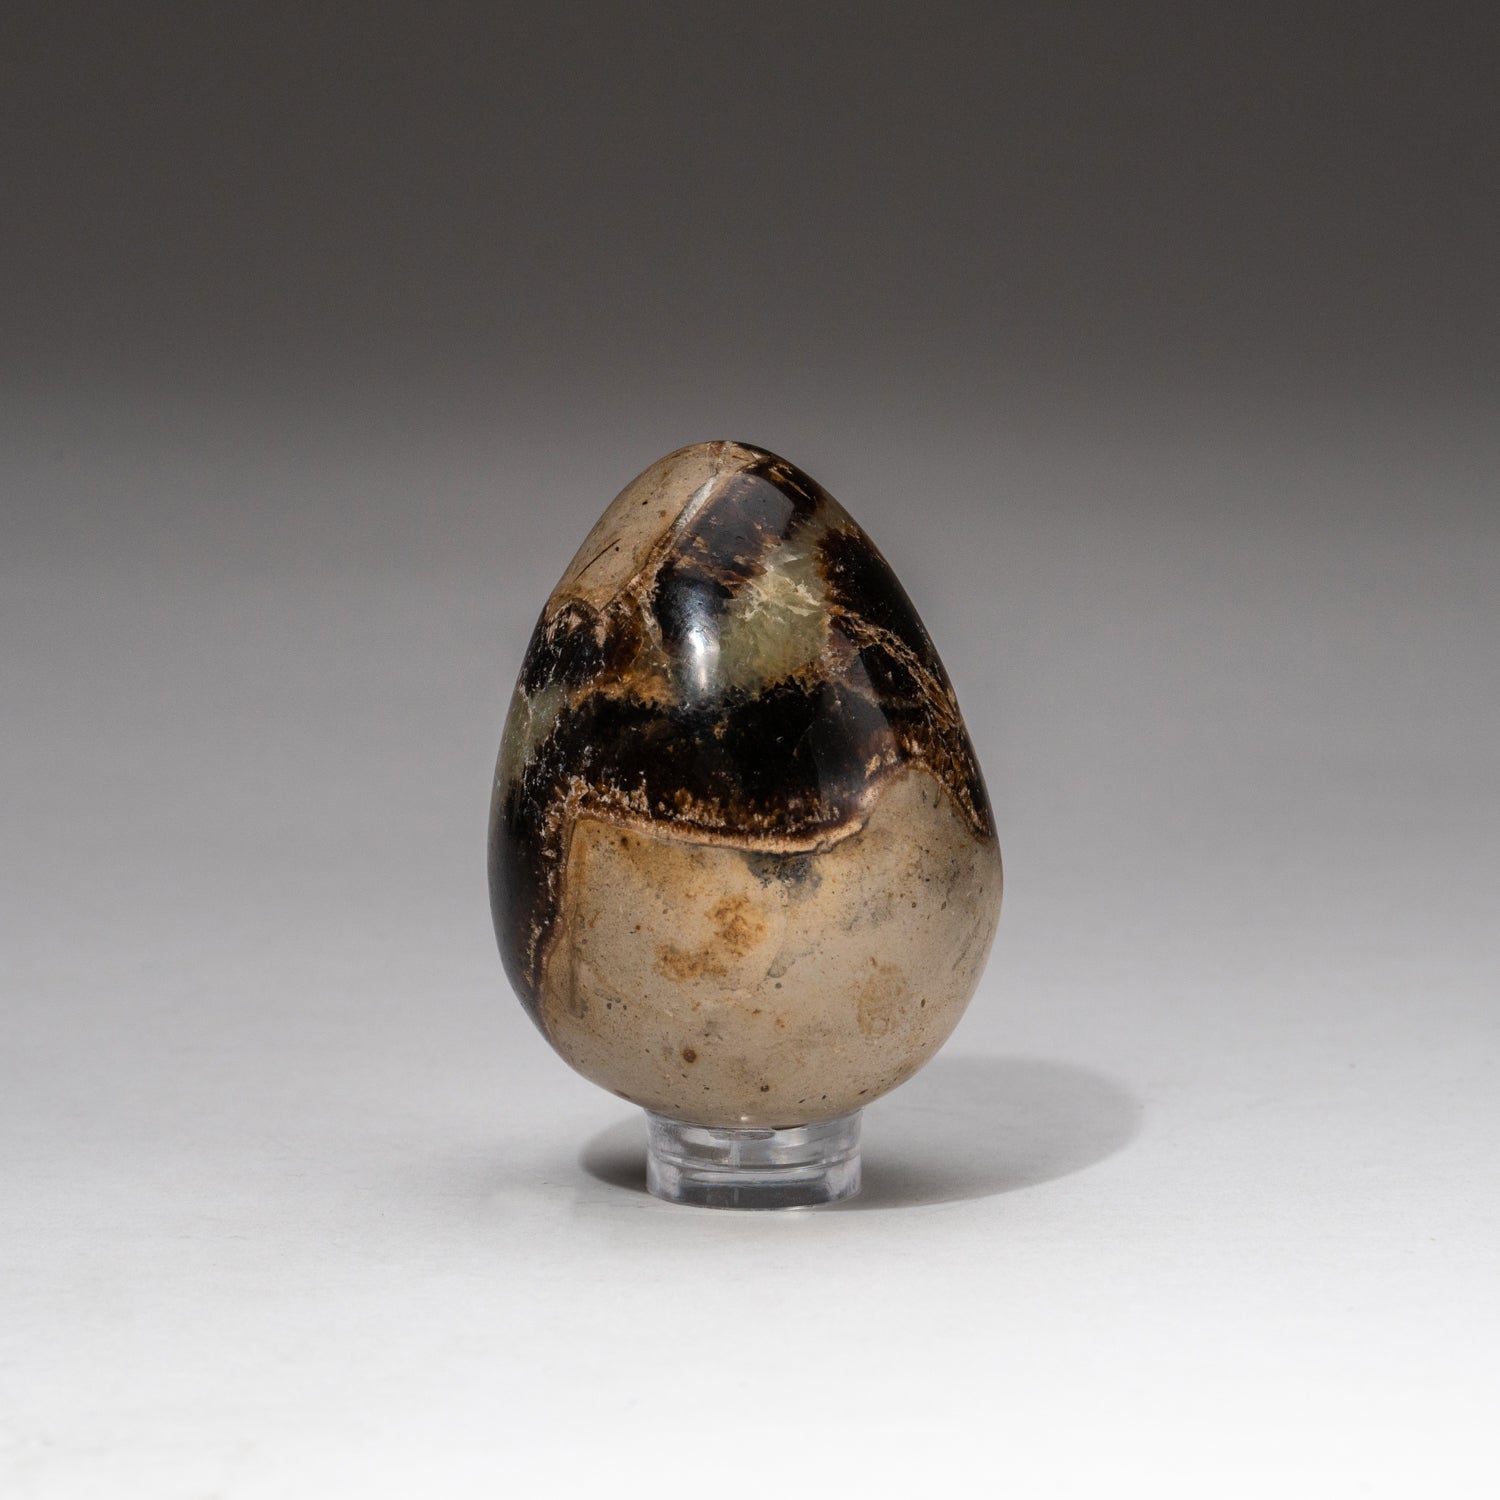 Polished Septarian Egg from Madagascar (89 grams)